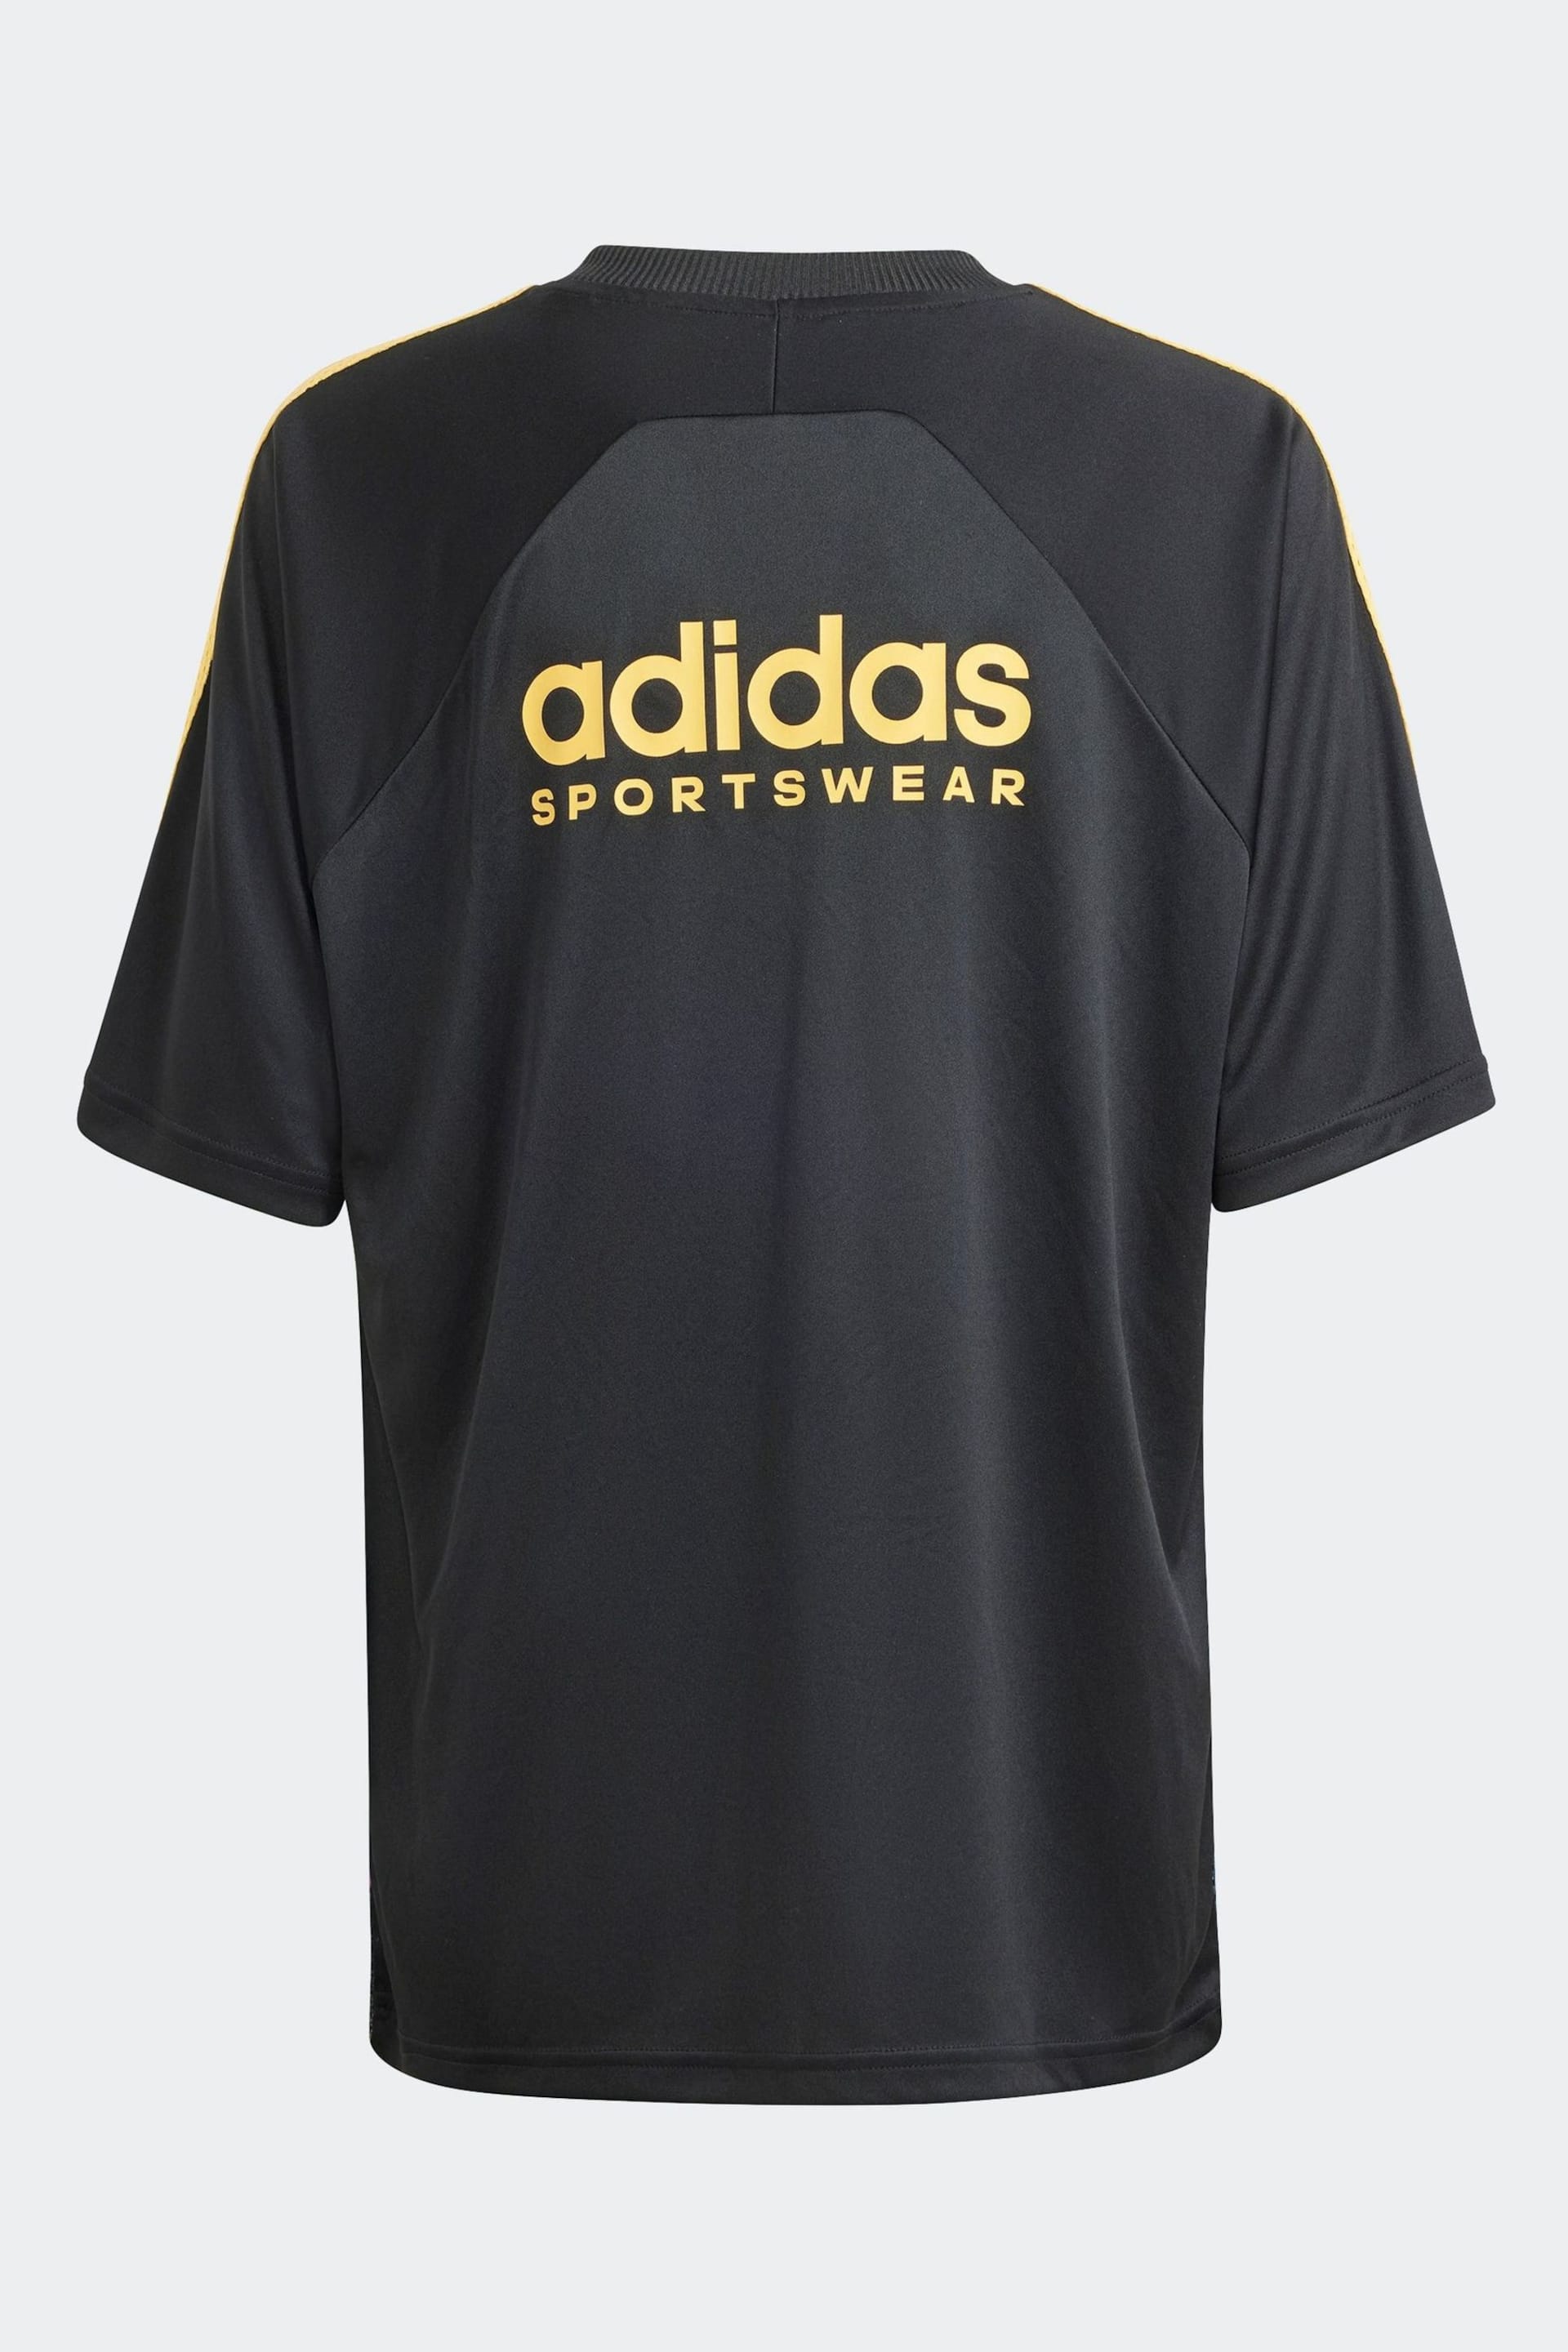 adidas Black T-Shirt - Image 2 of 6